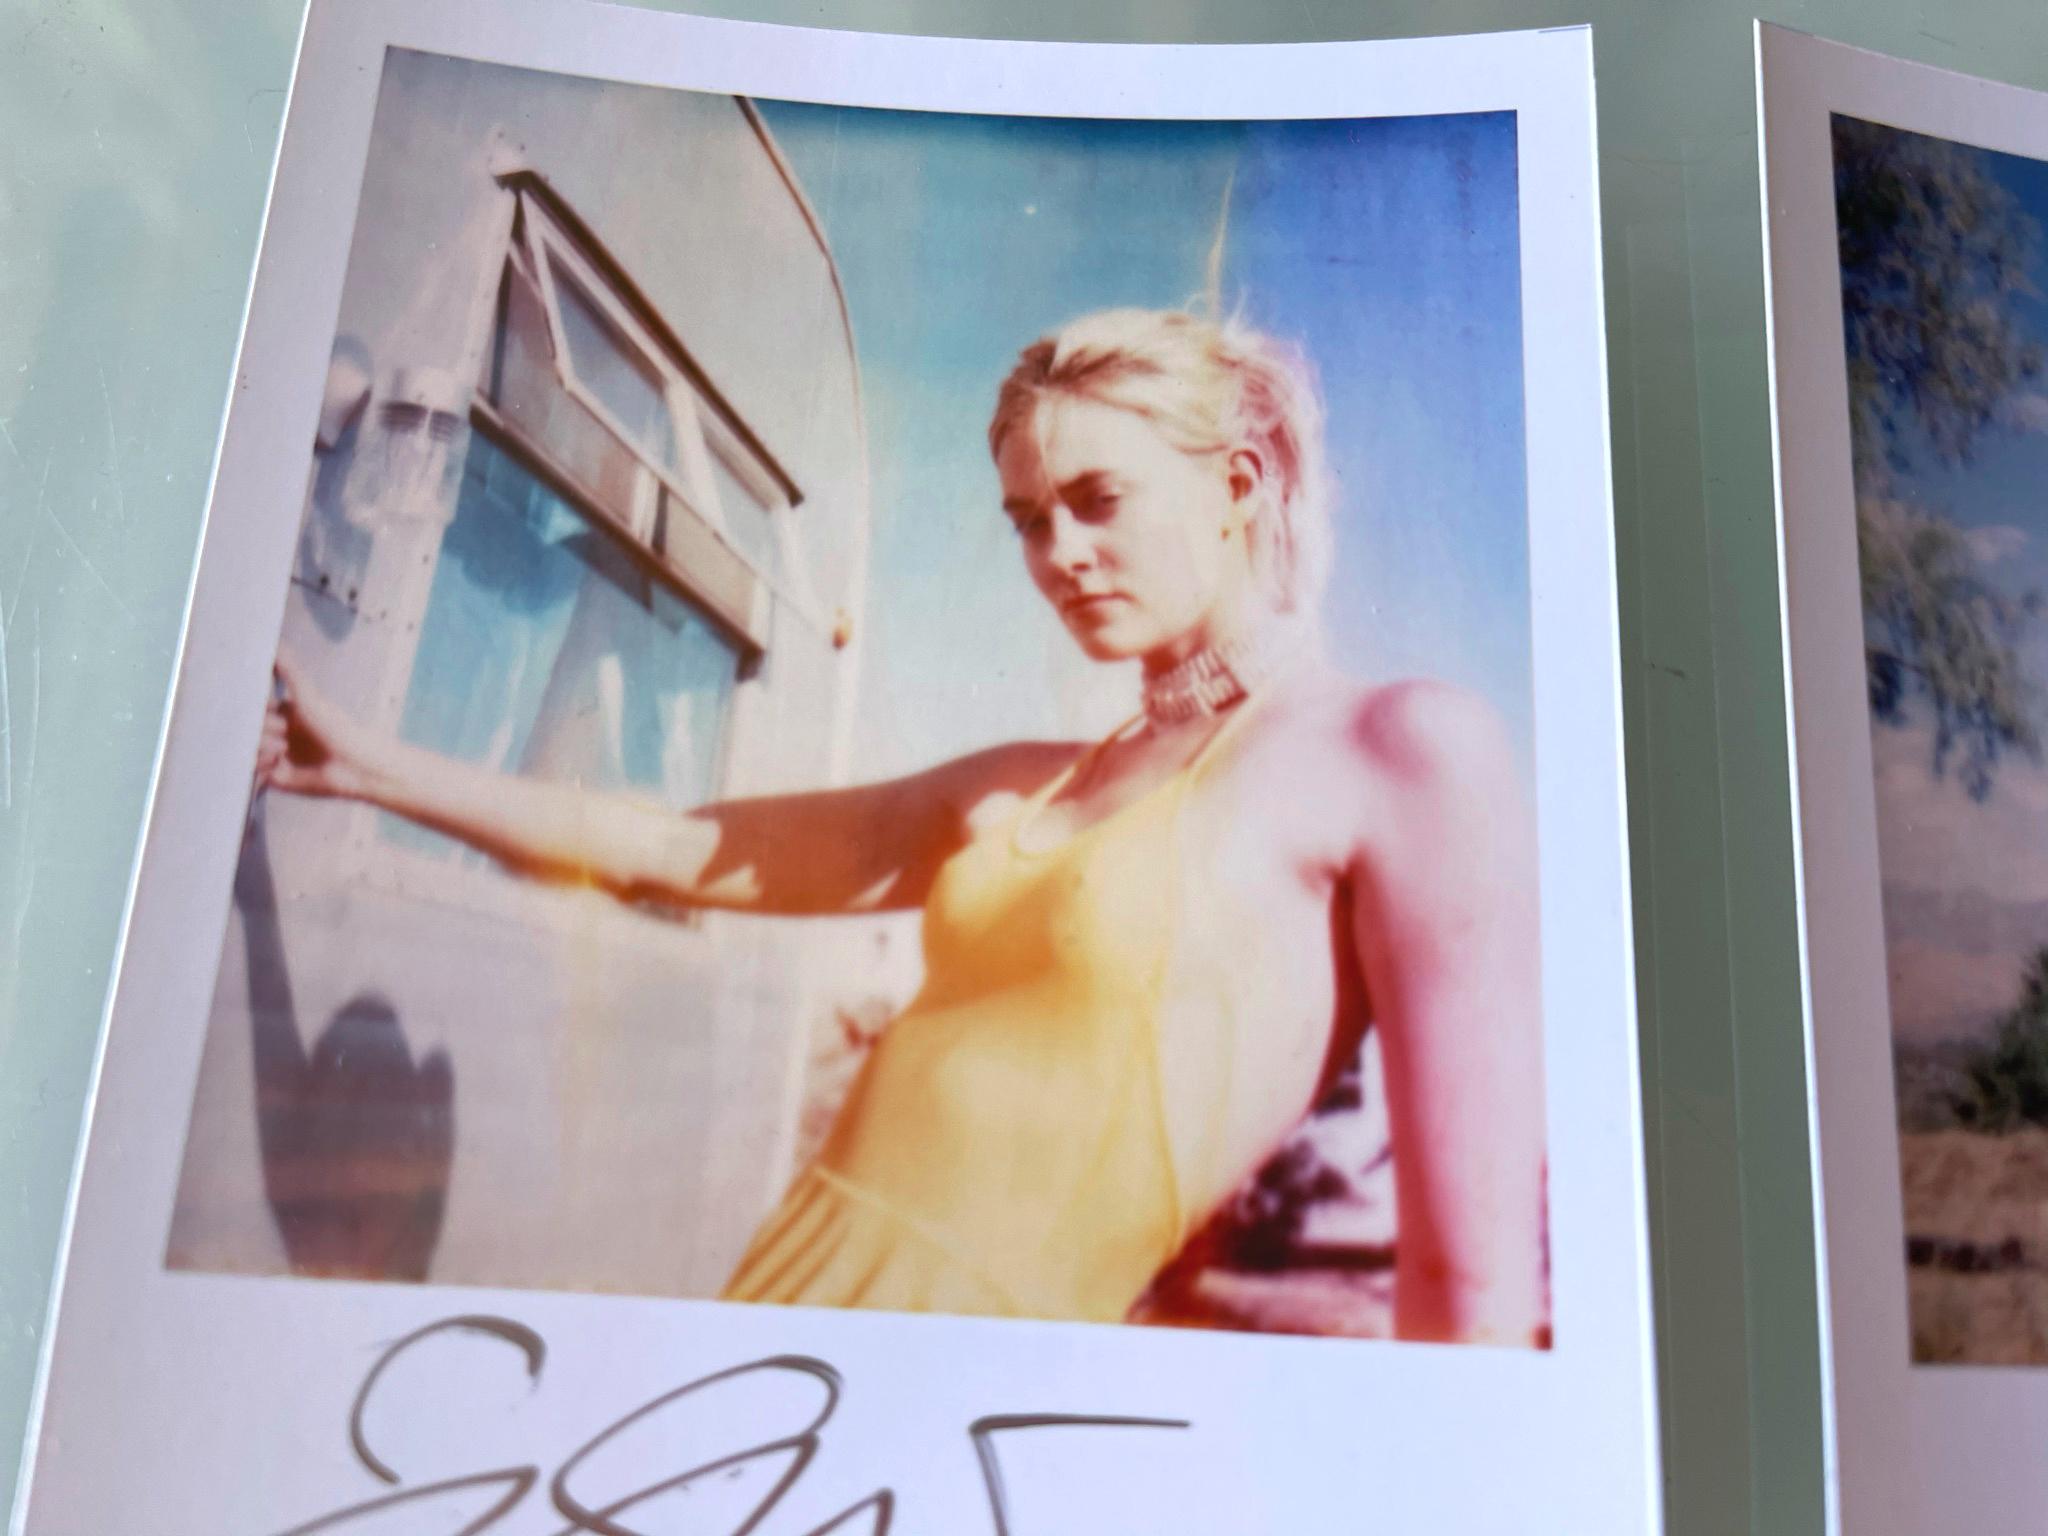 Stefanie Schneider 2 Polaroid sized Minis - 'Heavenly Falls' - signed, loose 2